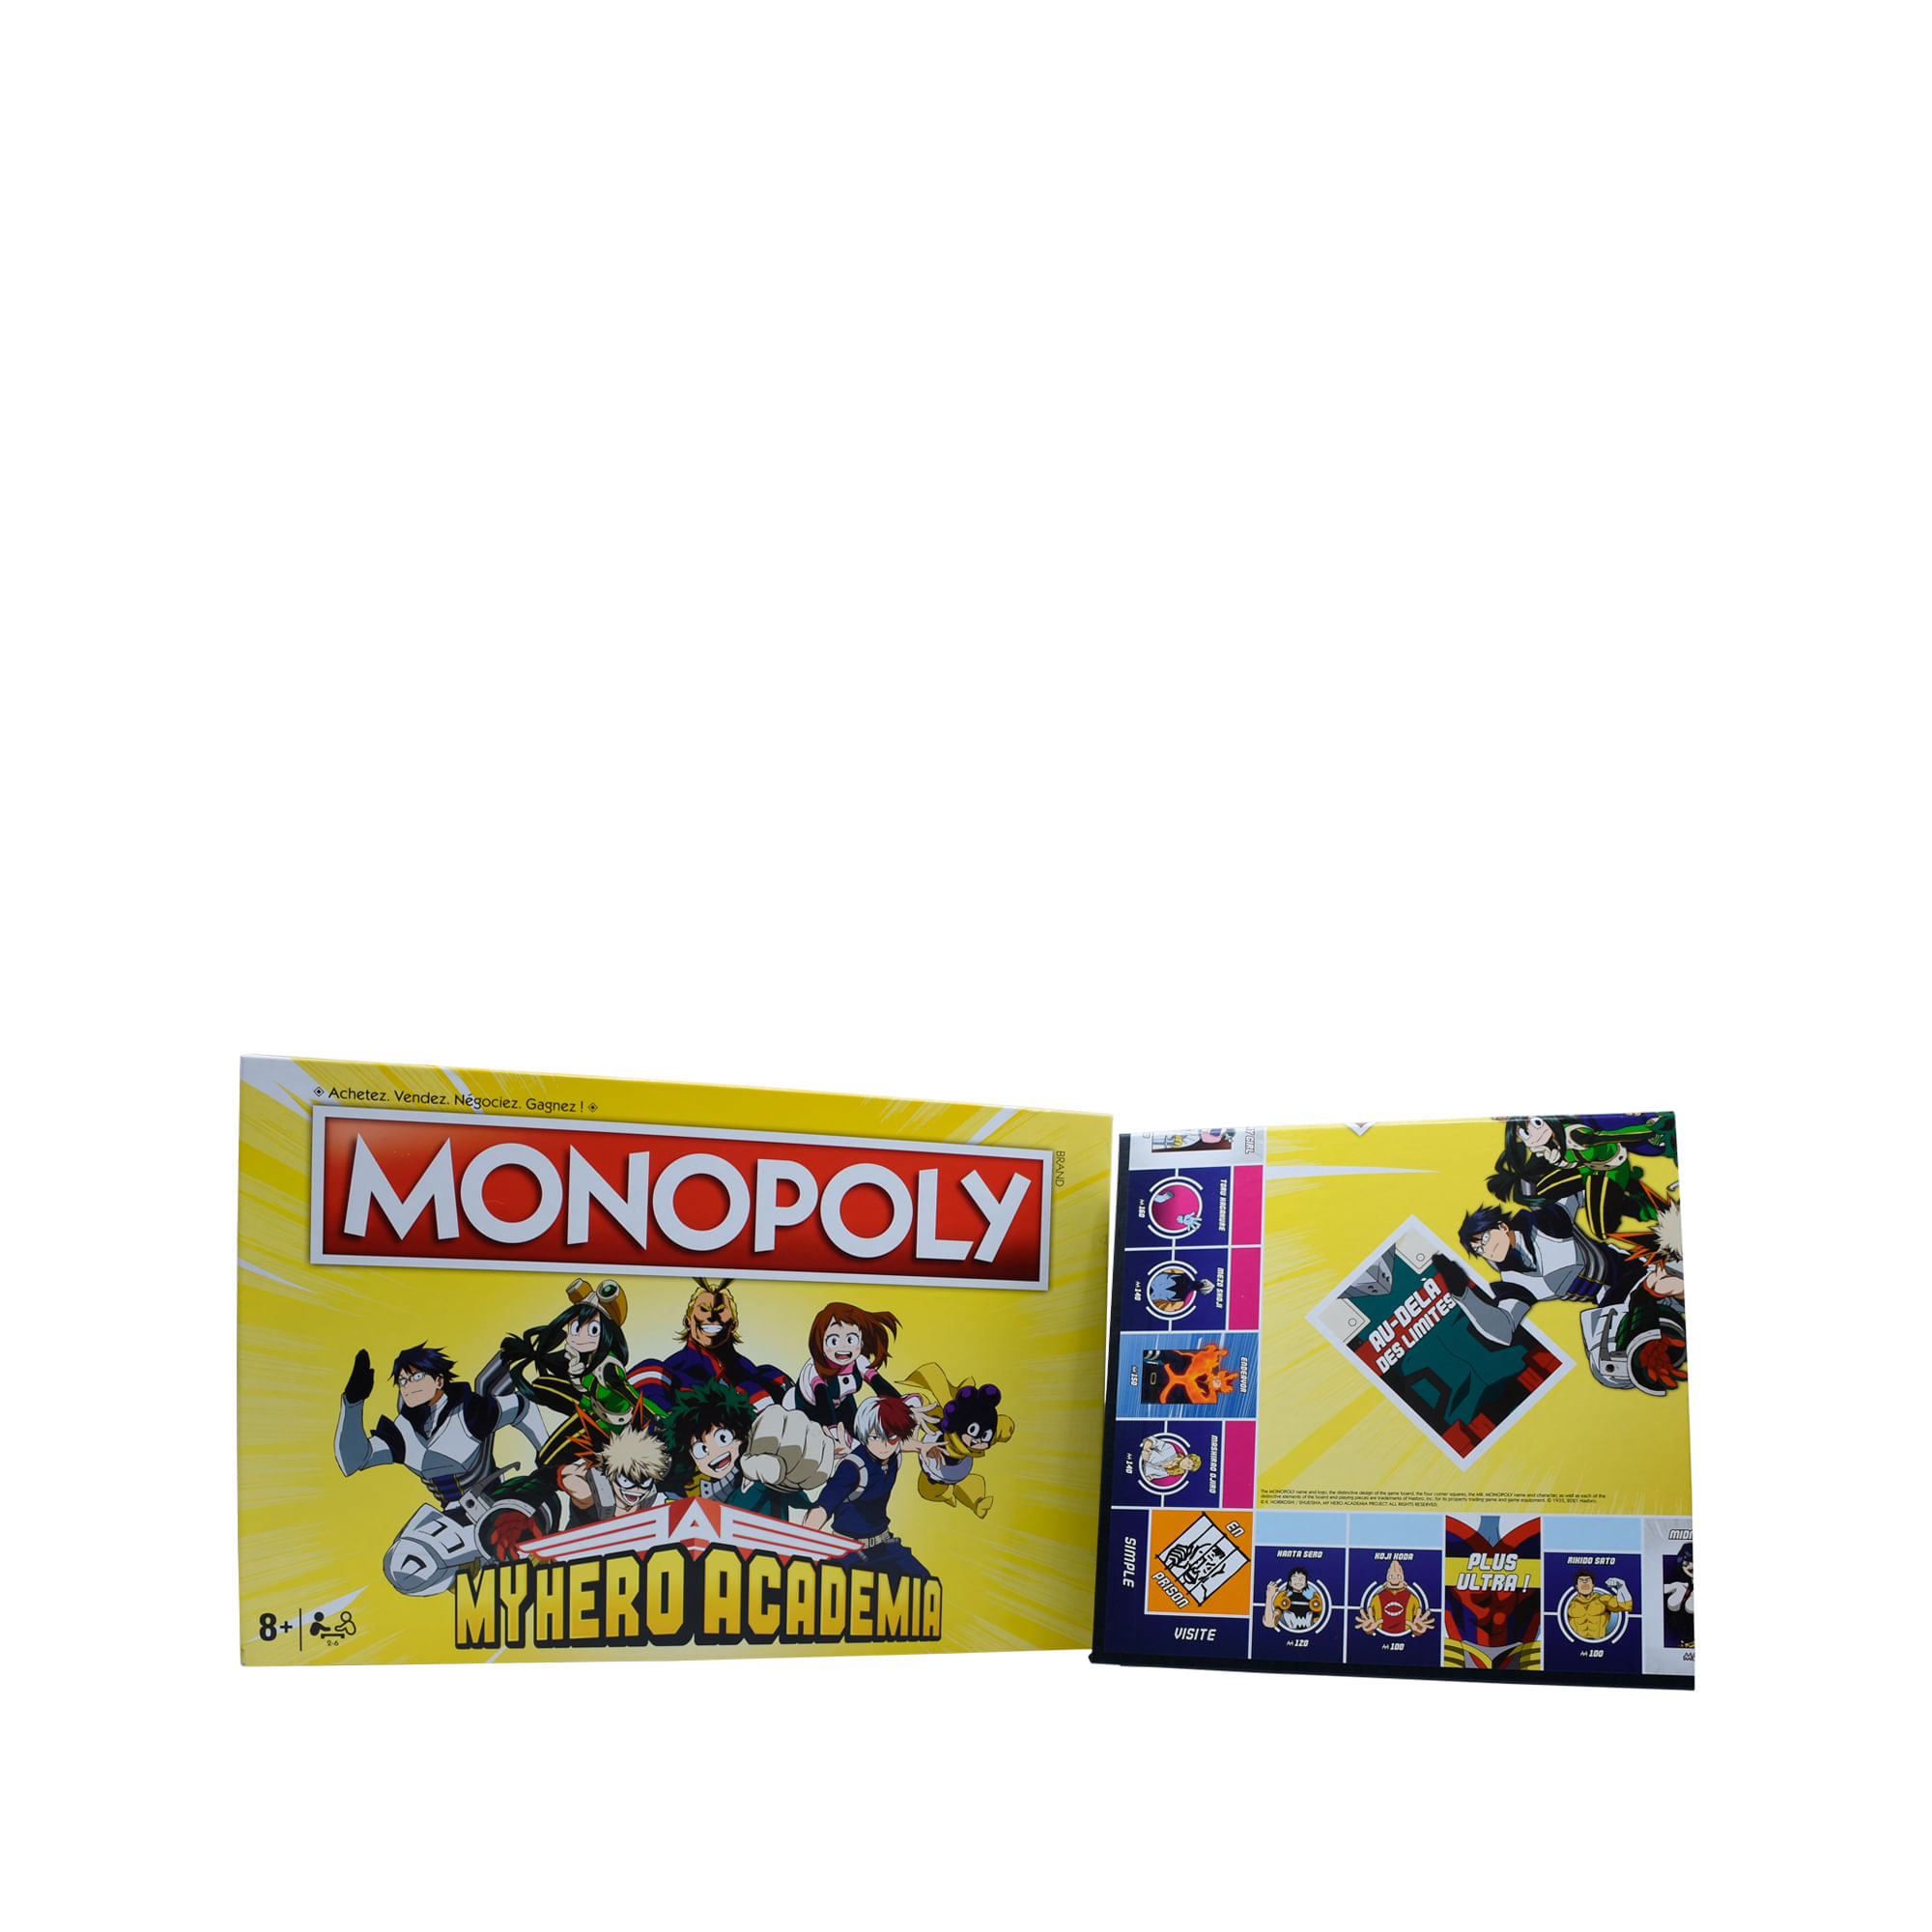 Saint Seiya: Monopoly (unboxing) 